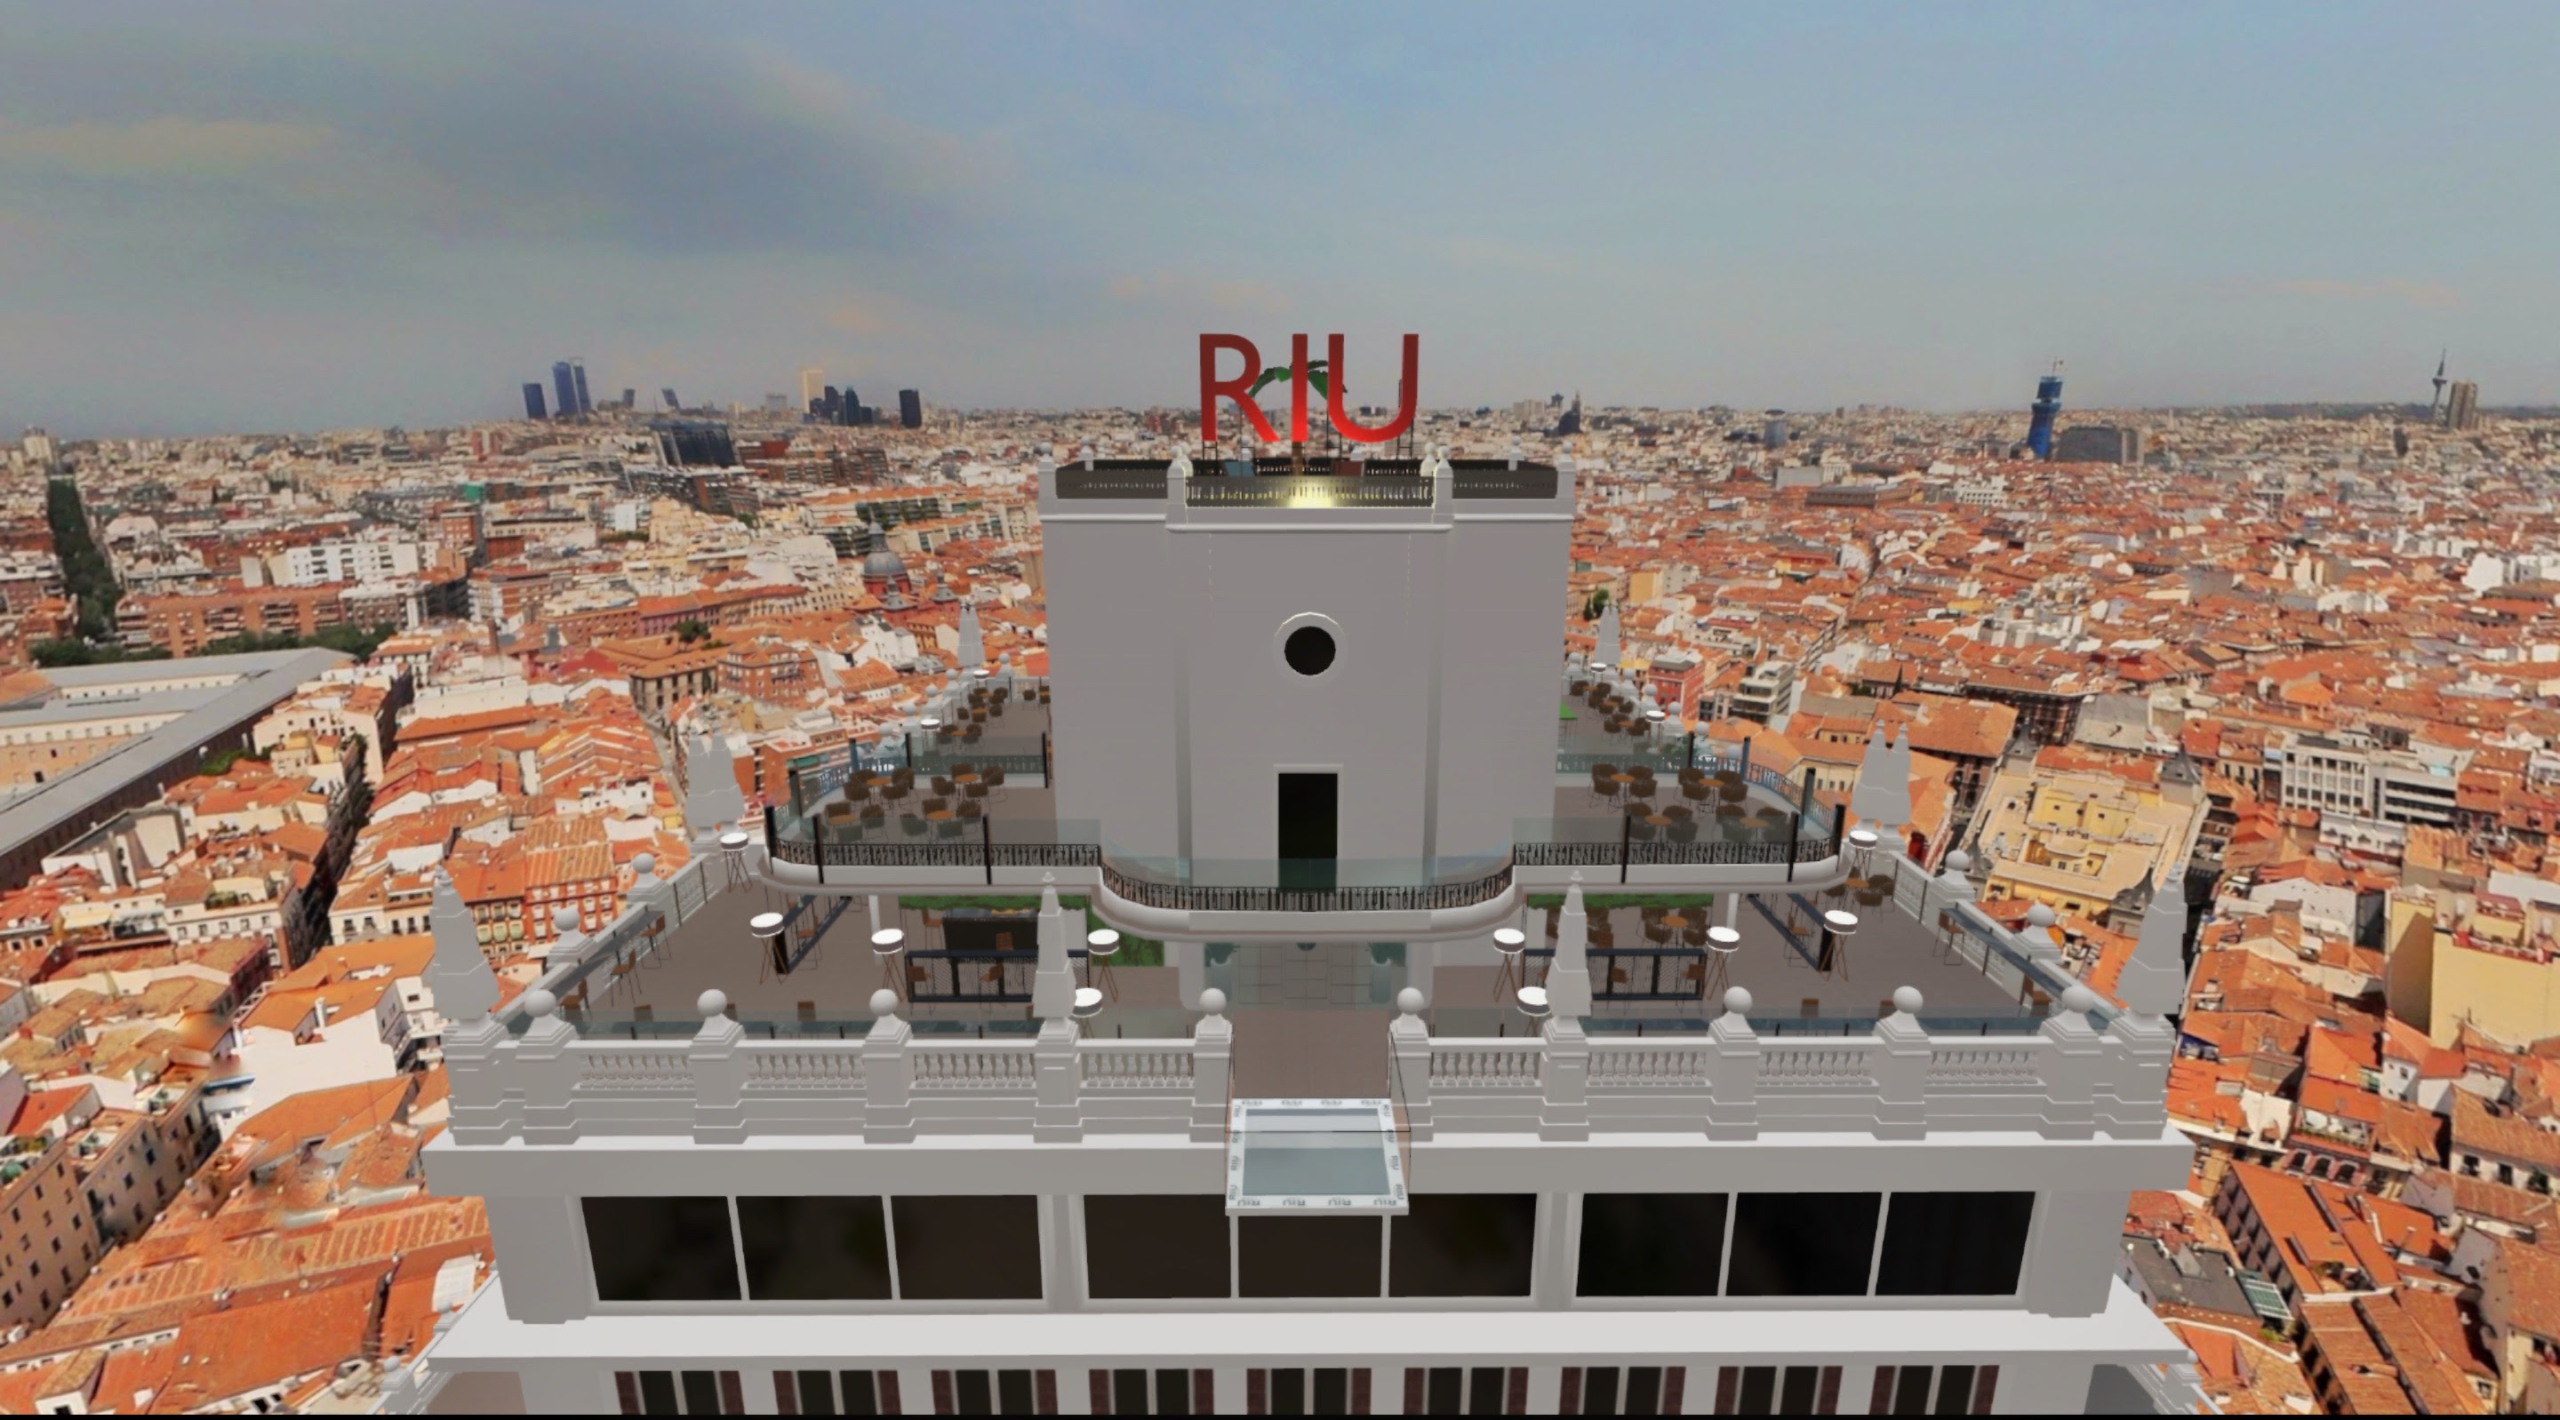 Das Hotel Riu Plaza España im Metaversum